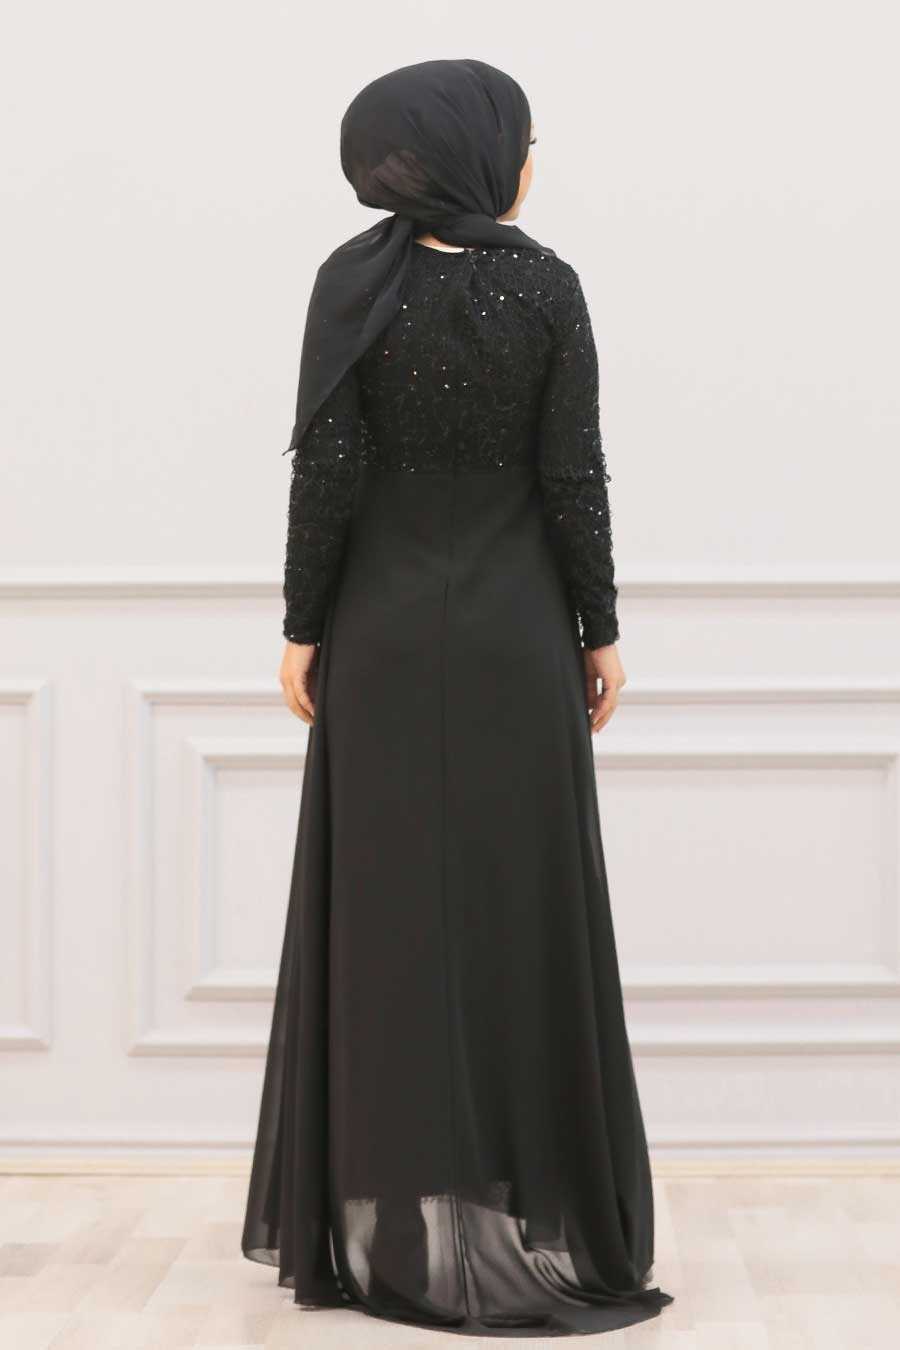 Neva Style - Plus Size Black Modest Wedding Dress 90000S